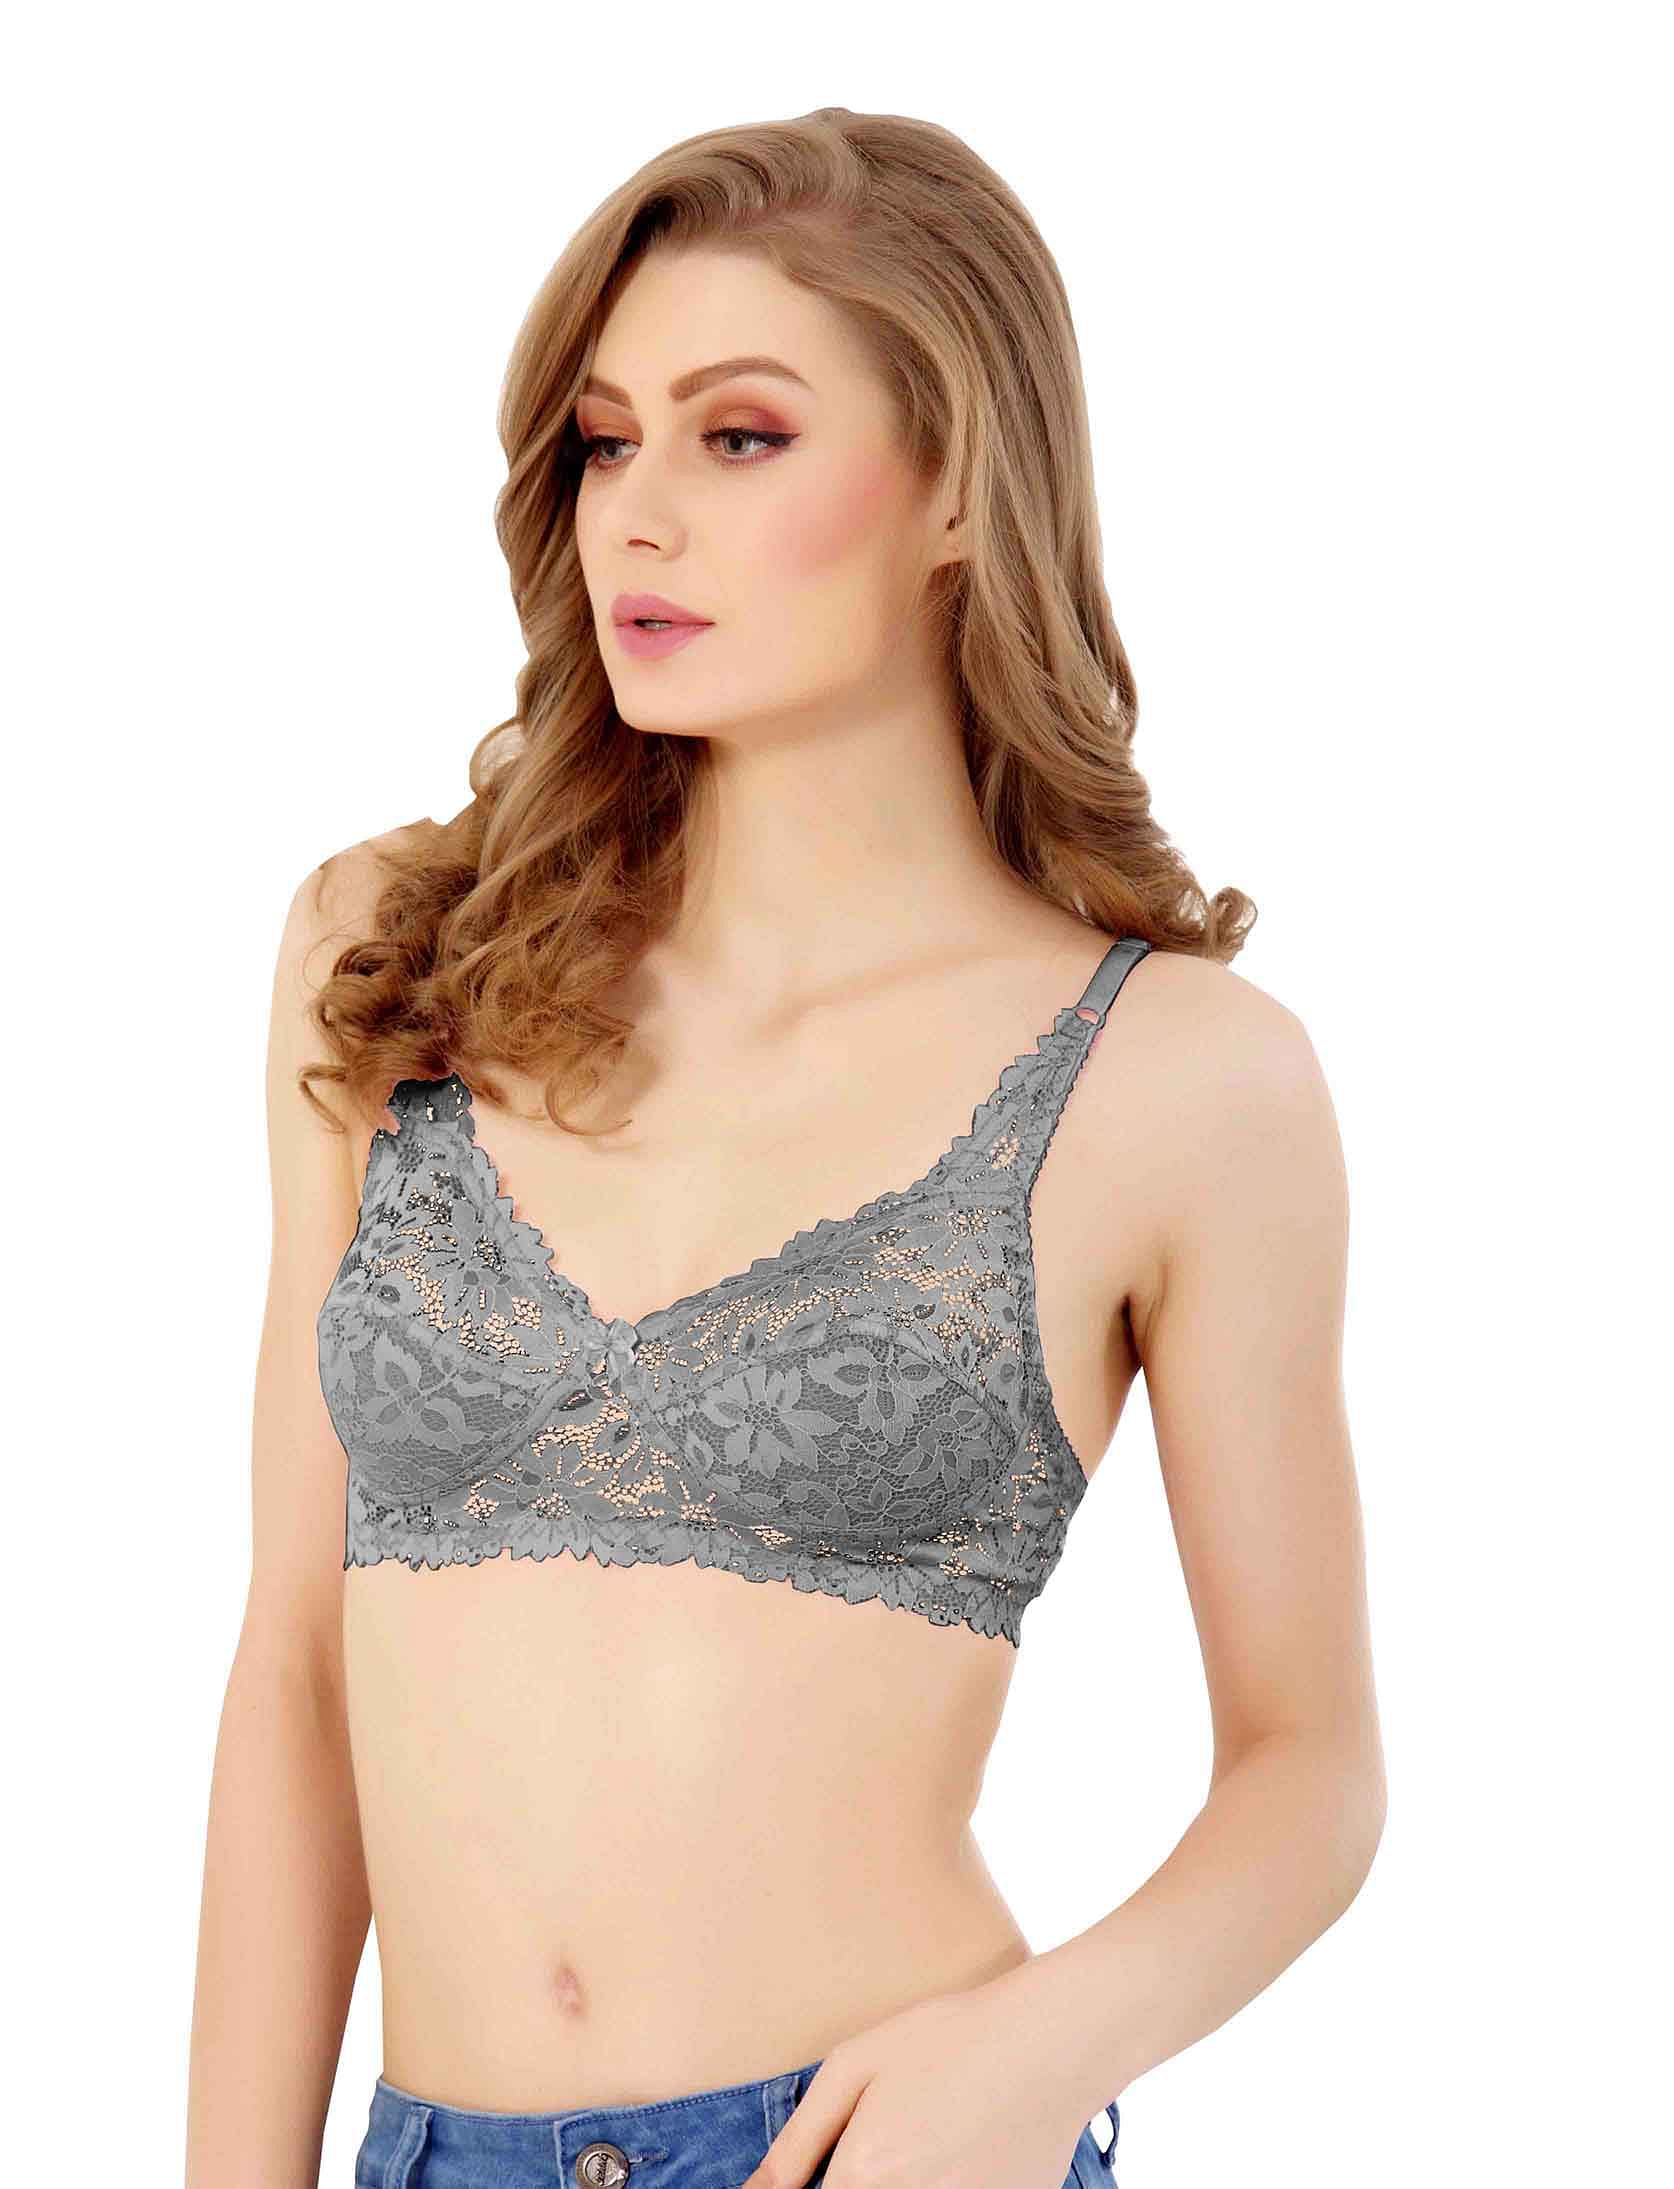 Half sheer Floral lace bra-KS030-Grey